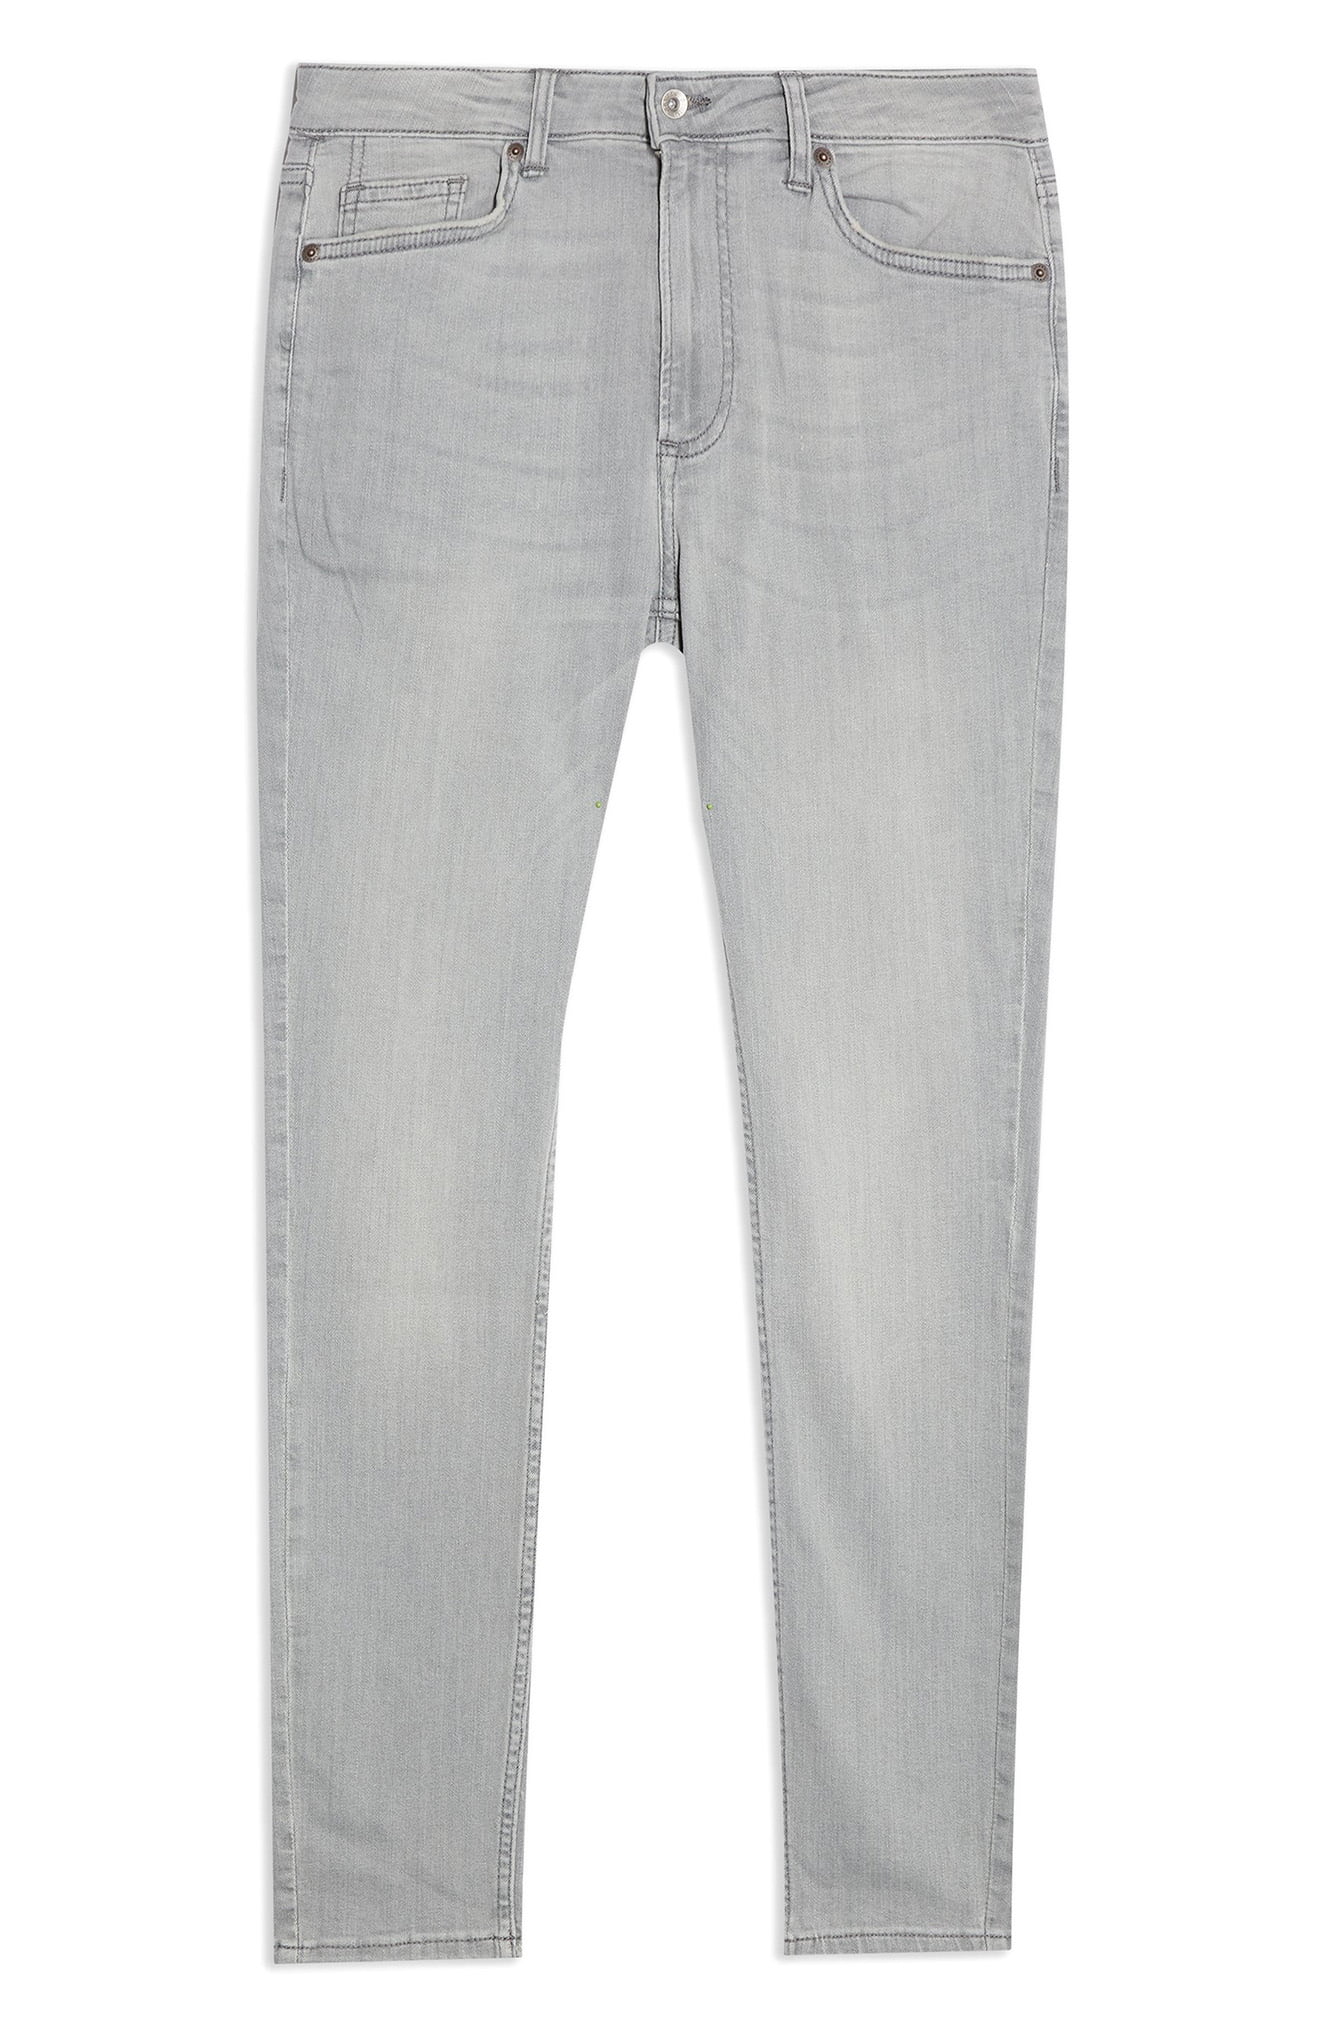 Men’s Topman Spray On Skinny Jeans, Size 32 x 34 - Grey | The Fashionisto